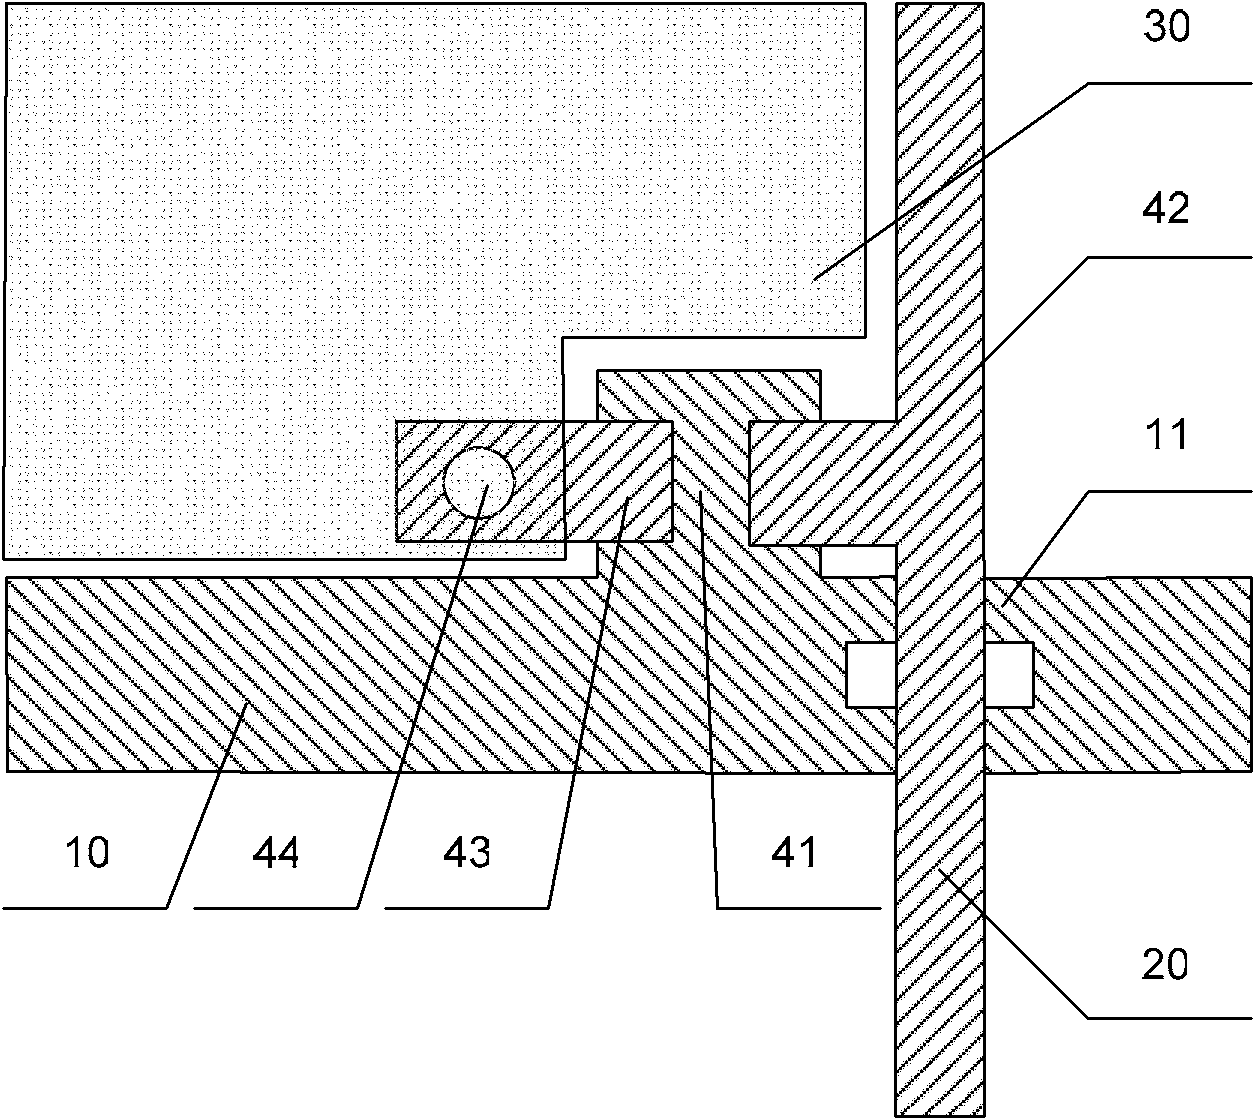 TFT-LCD (Thin Film Transistor-Liquid Crystal Display) array substrate